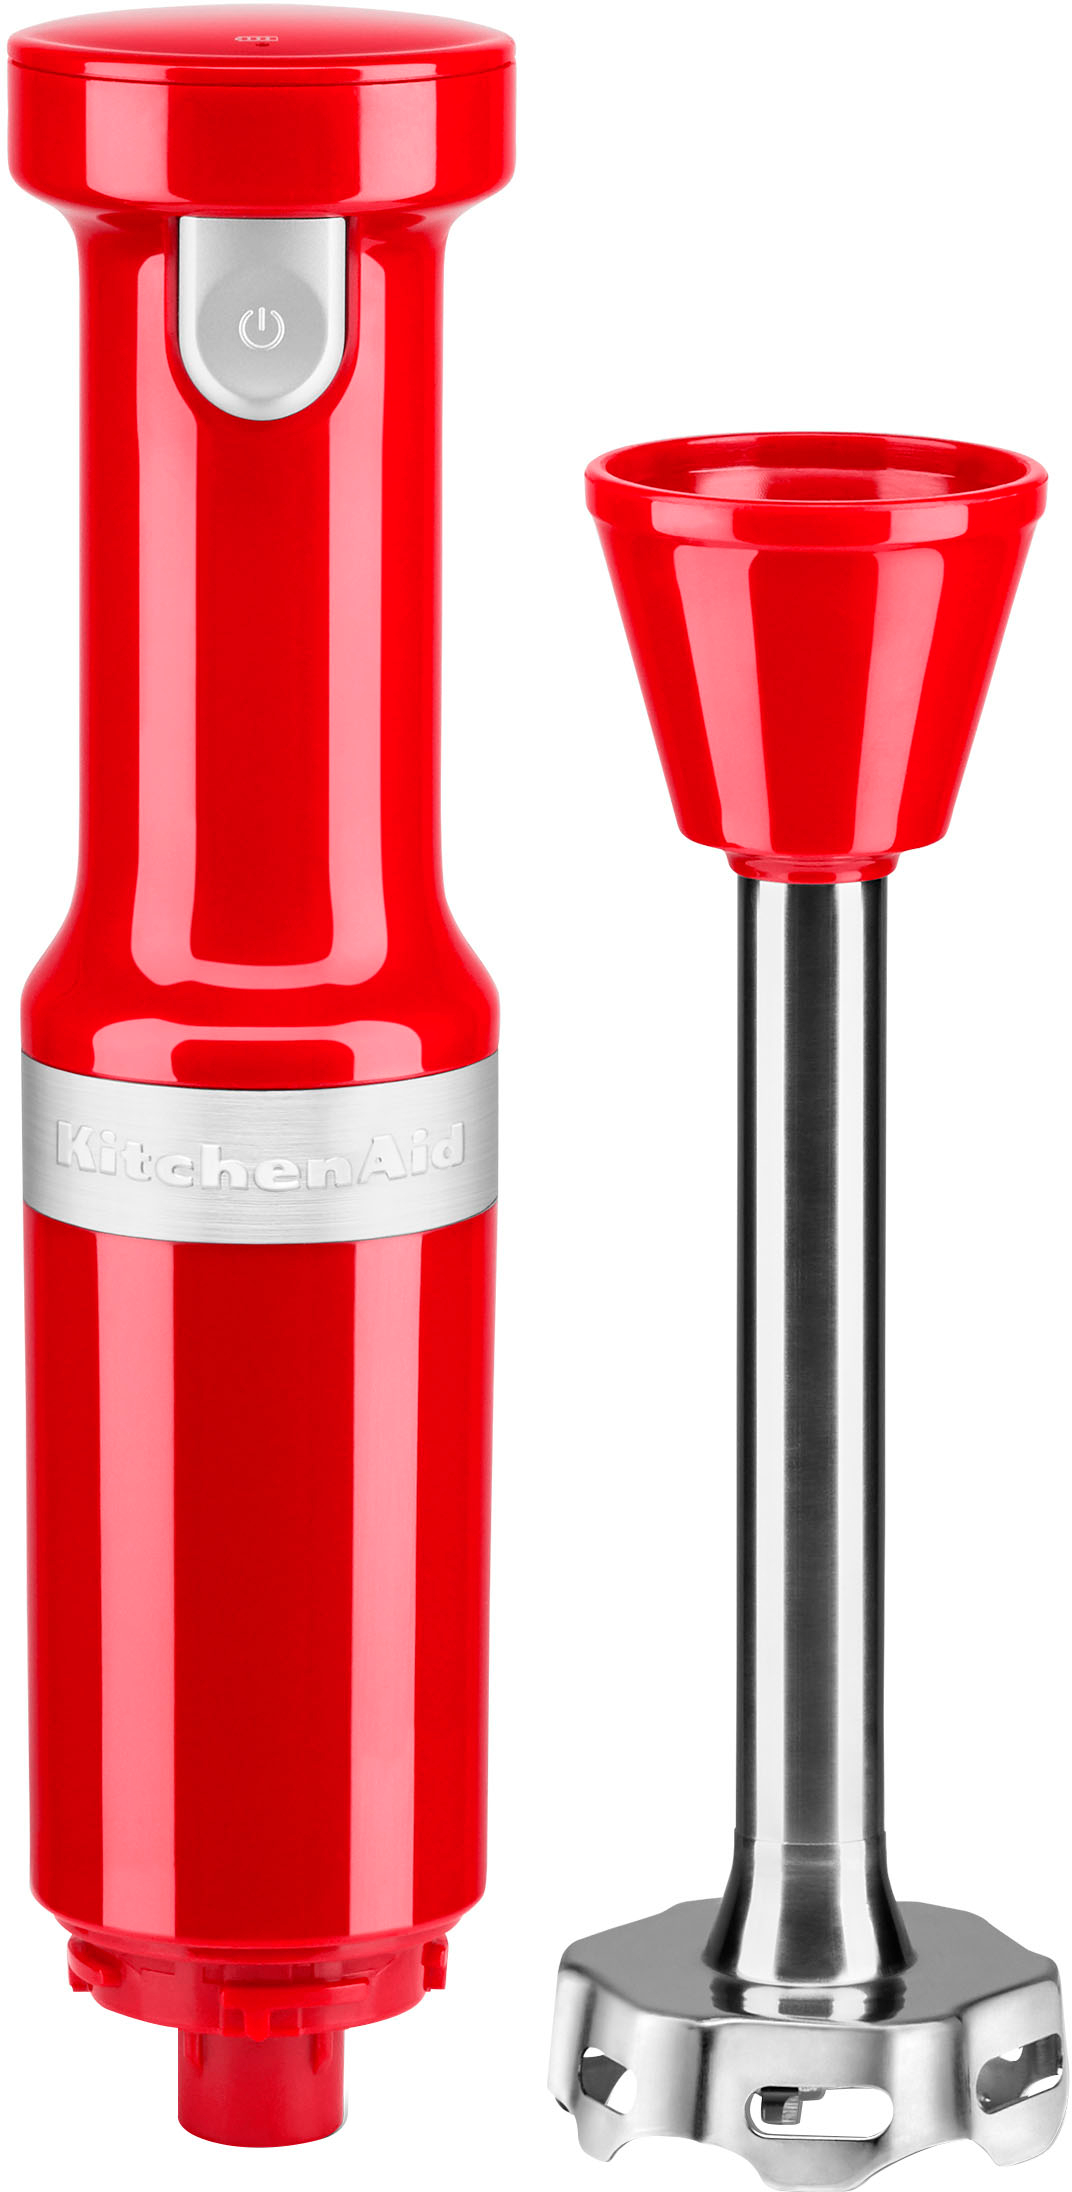 KitchenAid - Cordless Variable Speed Hand Blender - Empire Red